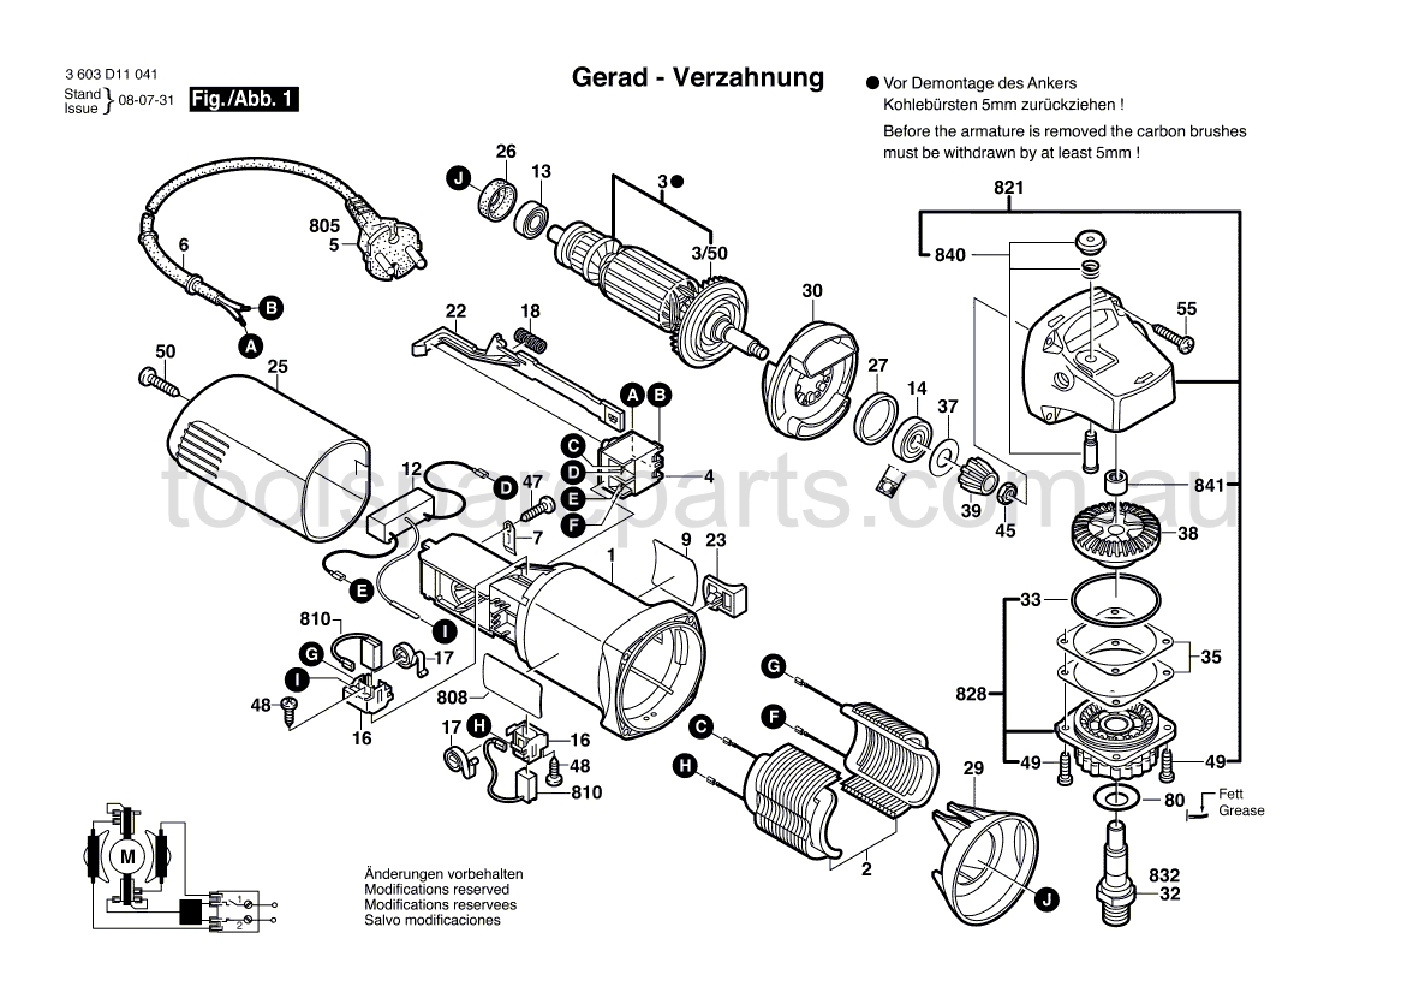 Bosch PWS 1000 3603D11041  Diagram 1